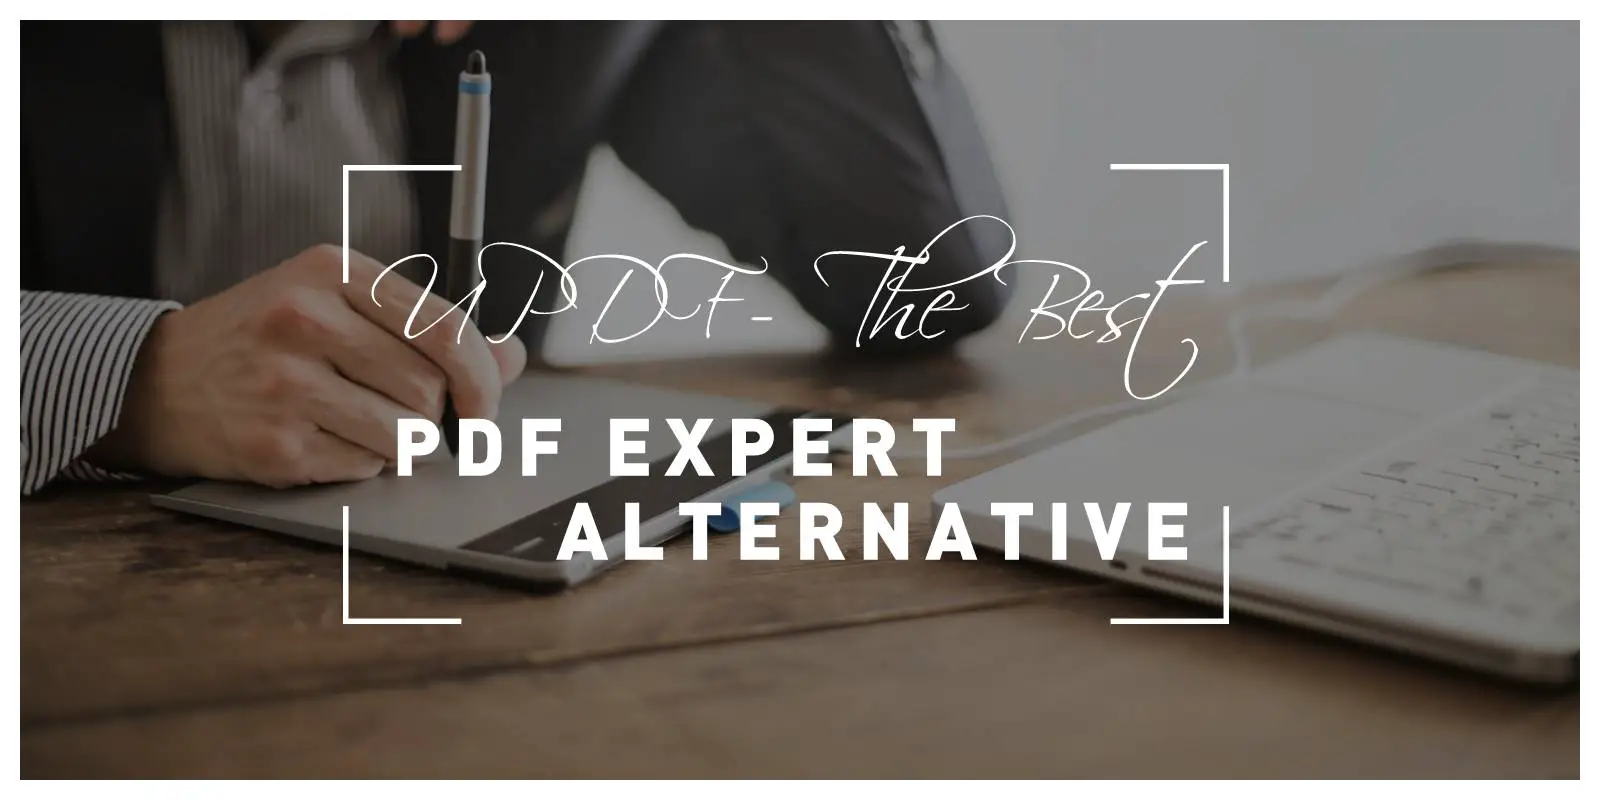 UPDF - The Best PDF Expert Alternative